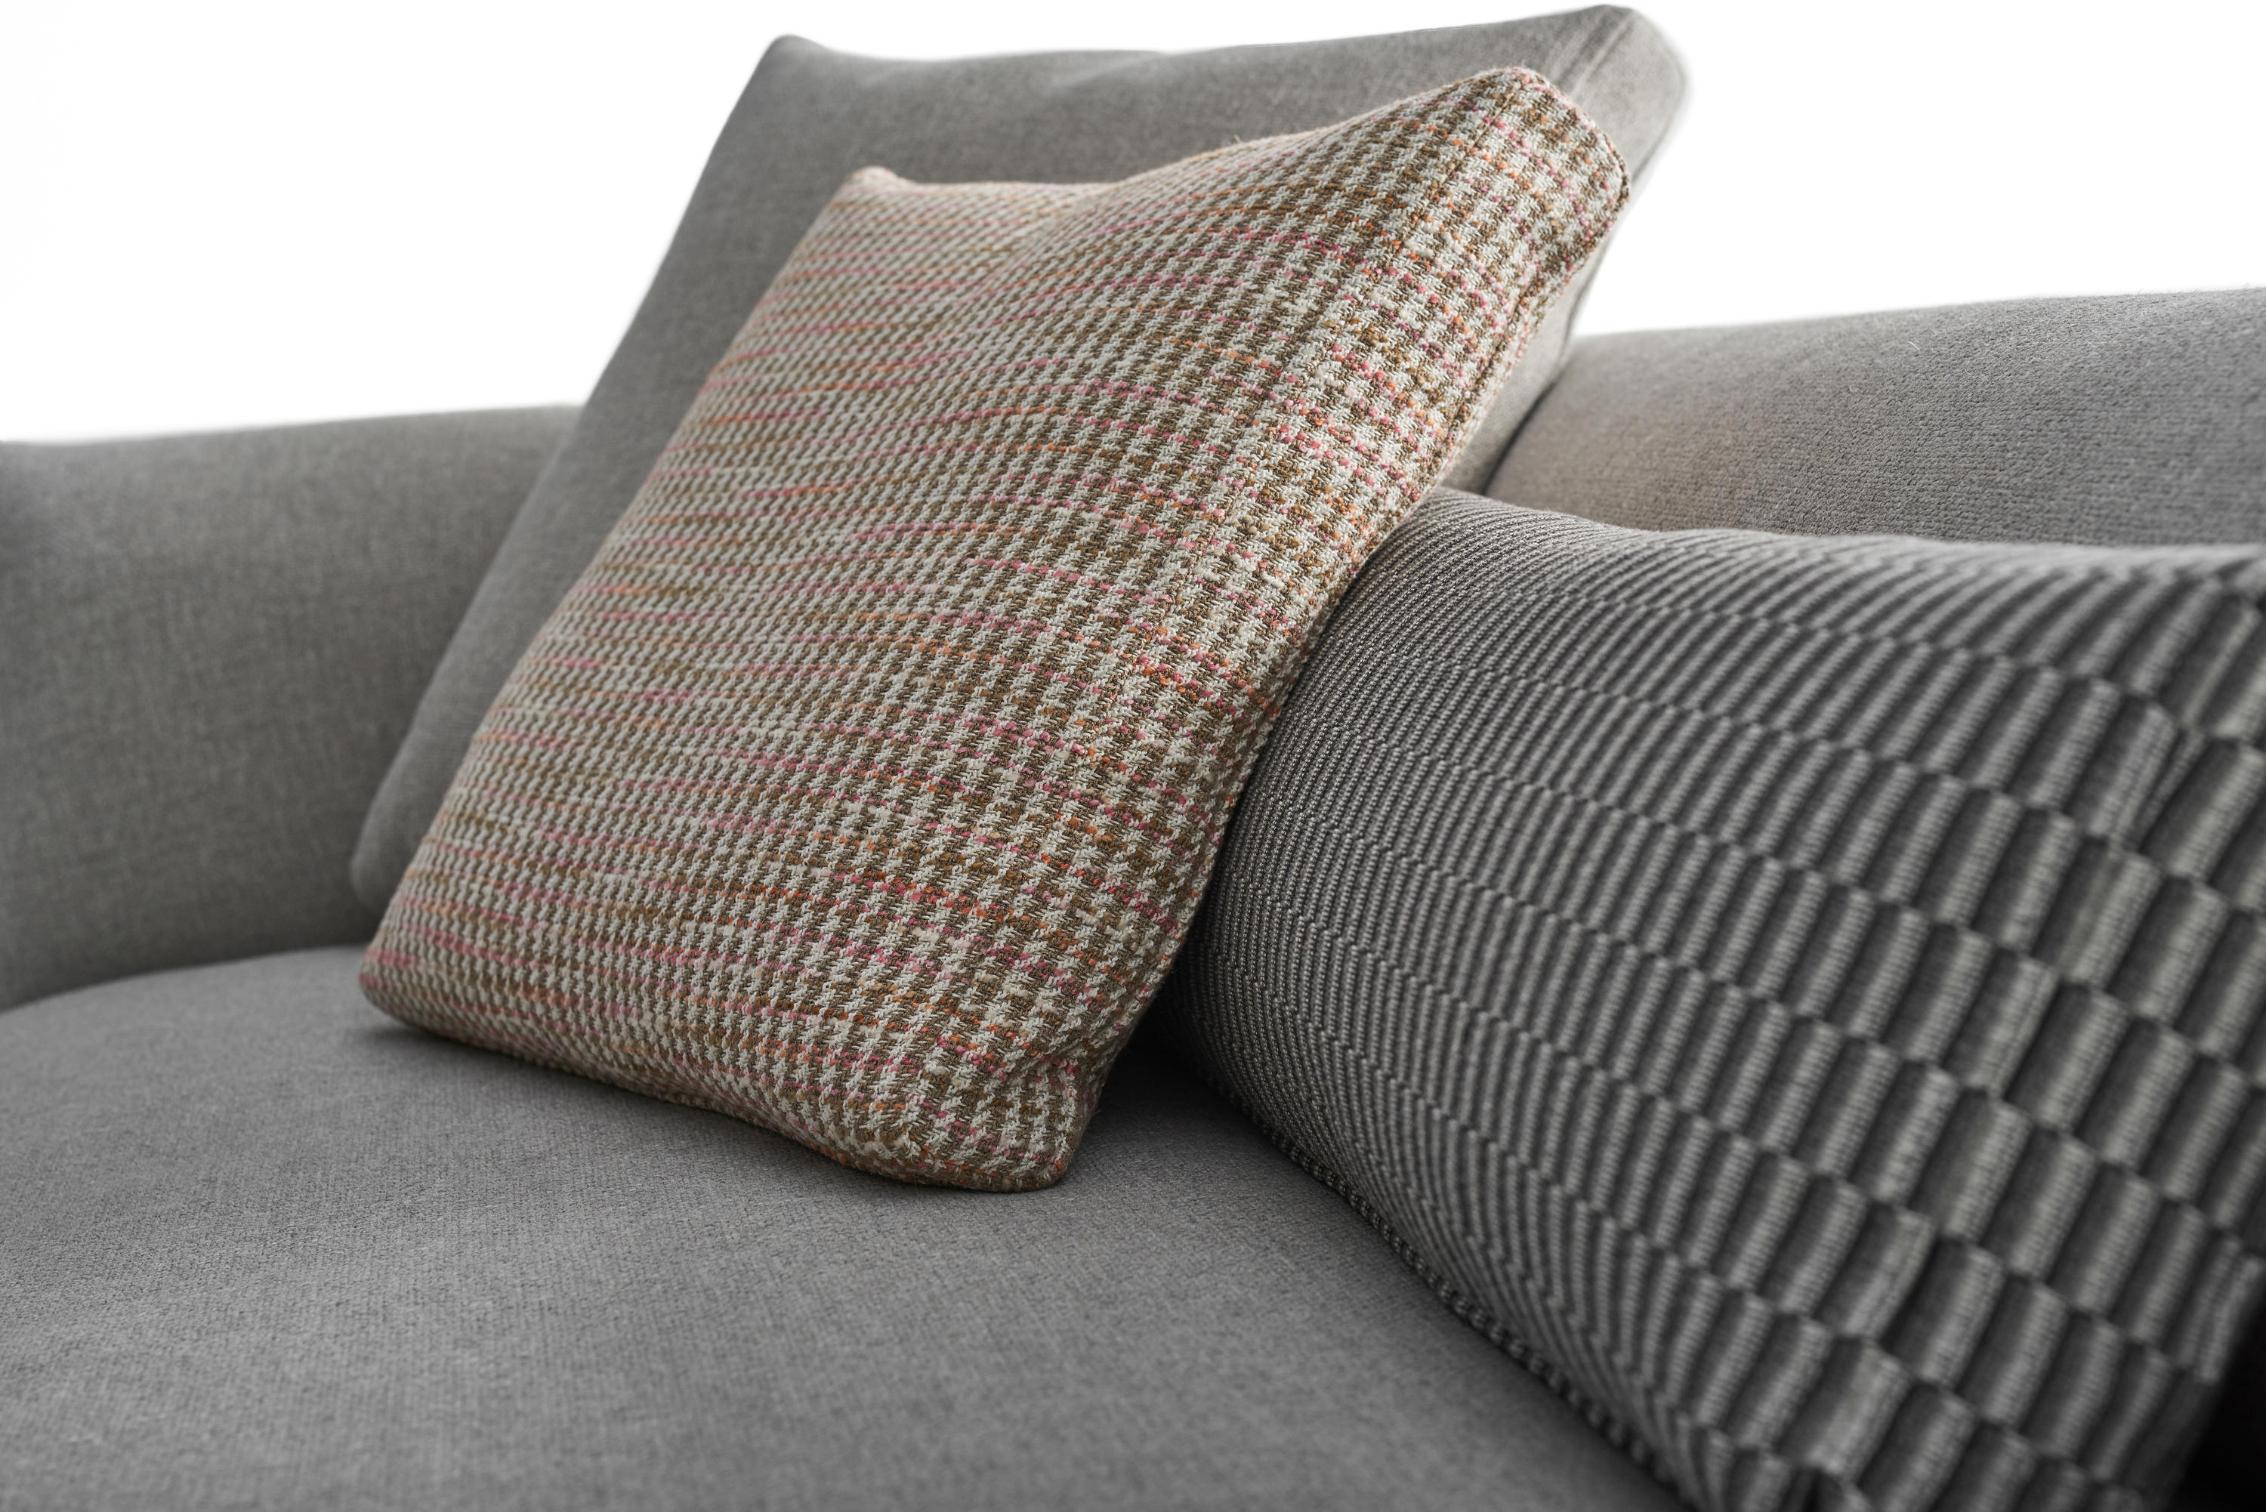 Italian Cosy Sectional Sofa for Luxury Comfort